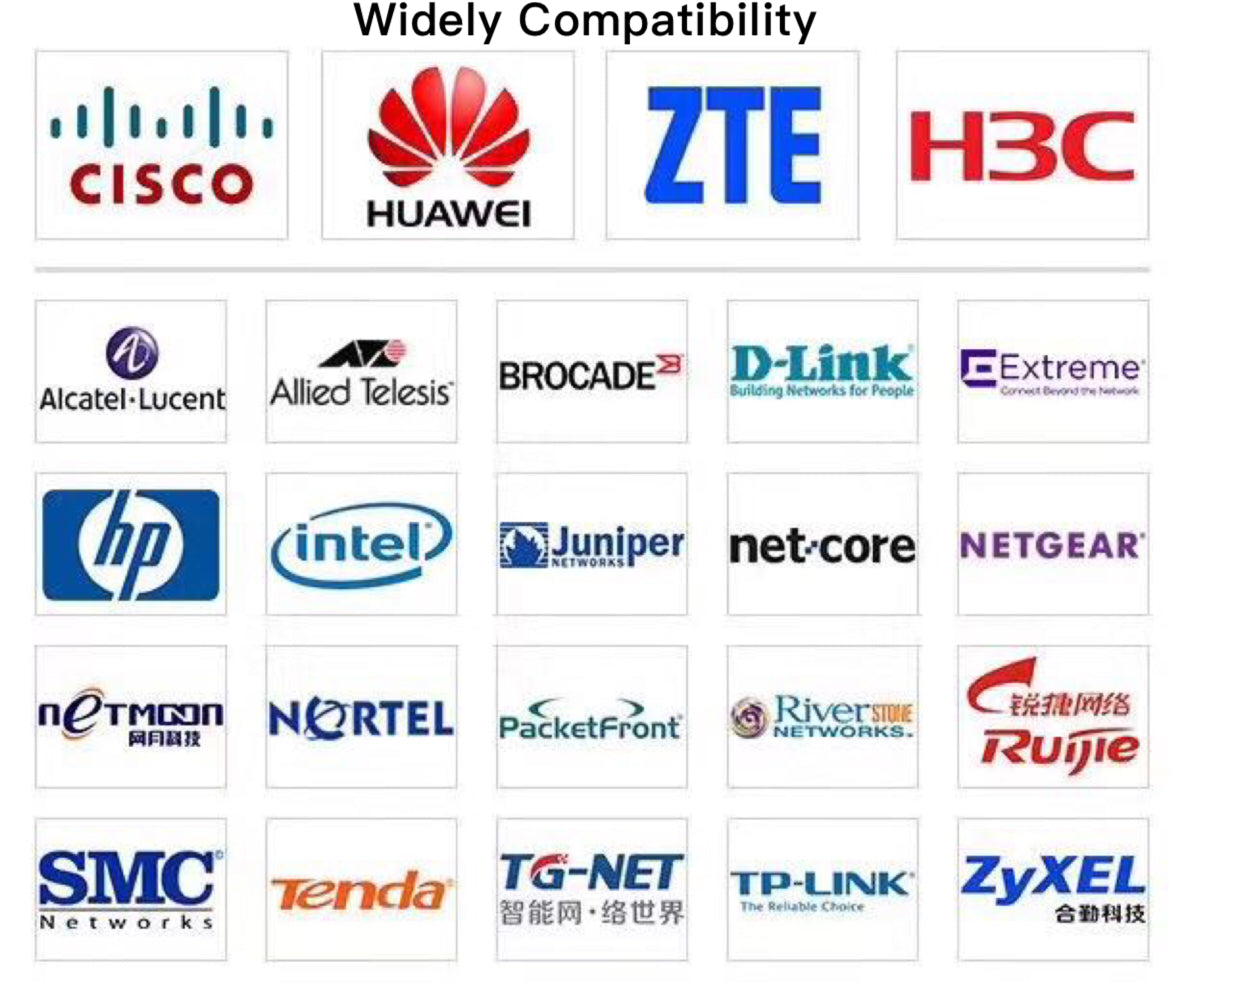 SFP+10G SM1310 Dualfaser-10KM-LC-Transceivermodul, kompatibel mit Huawei Cisco usw. Switch